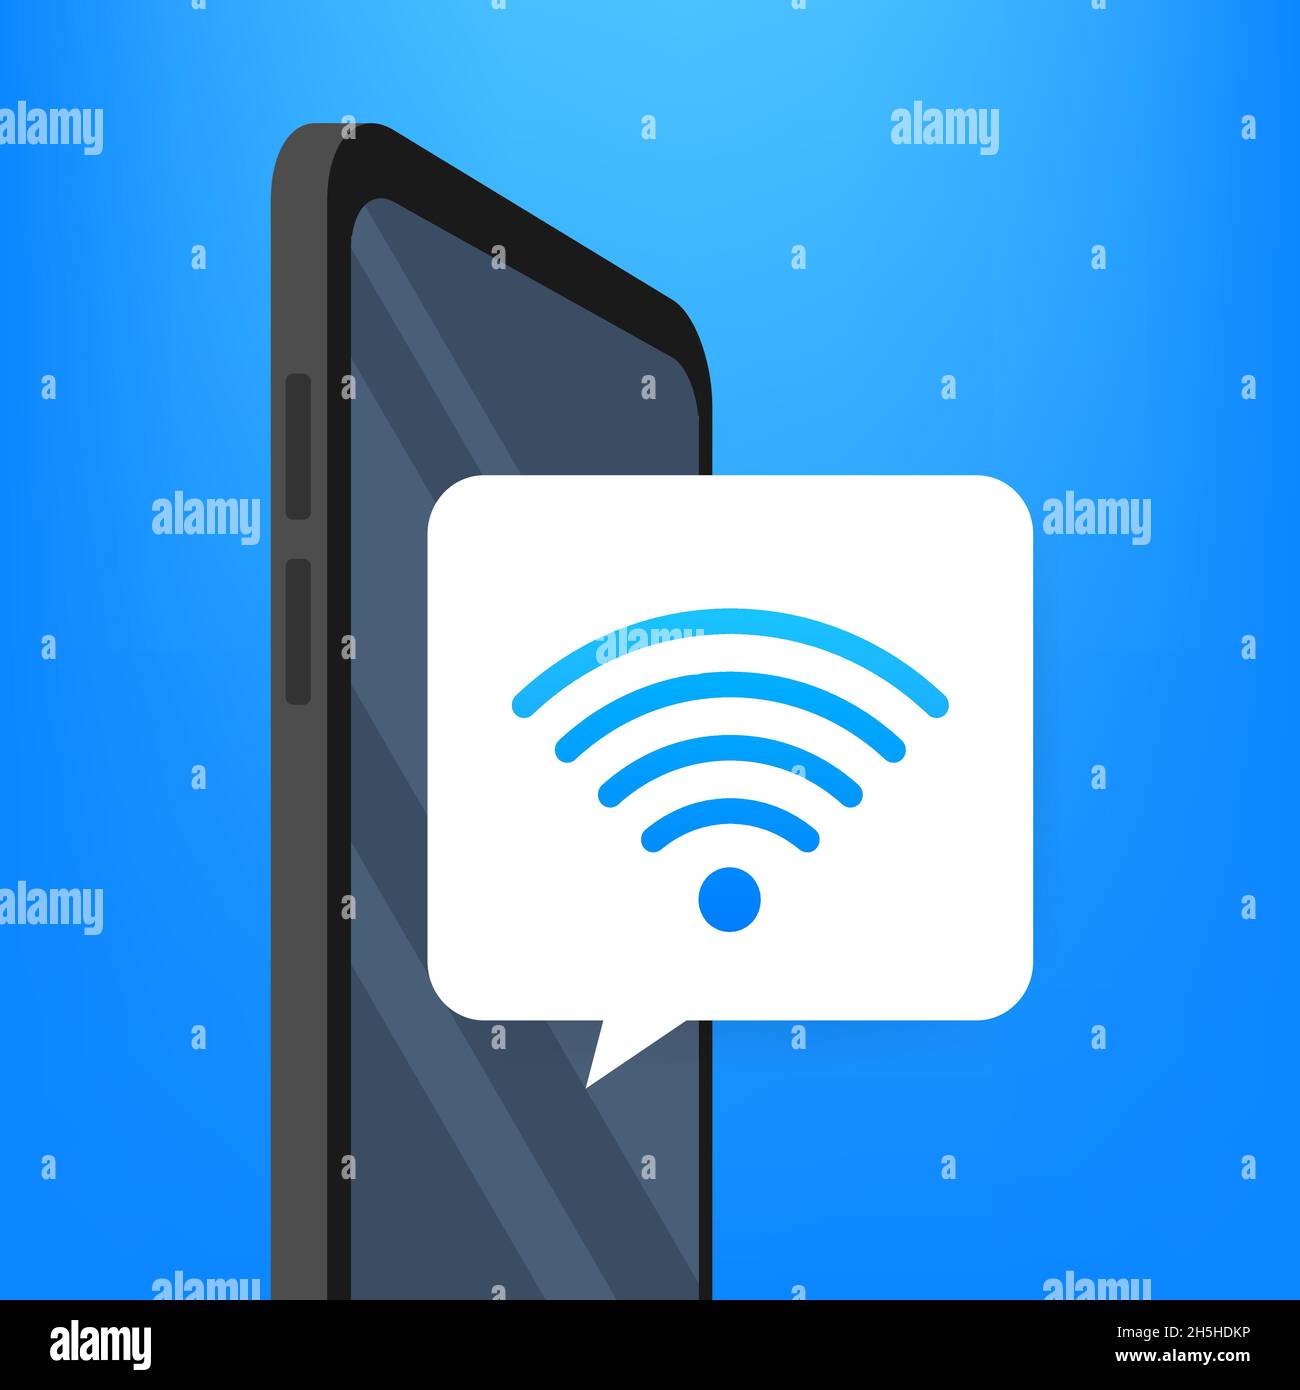 Wireless-Technologie. WiFi-Internetverbindung auf dem Smartphone-Bildschirm. Vektorgrafik. Stock Vektor